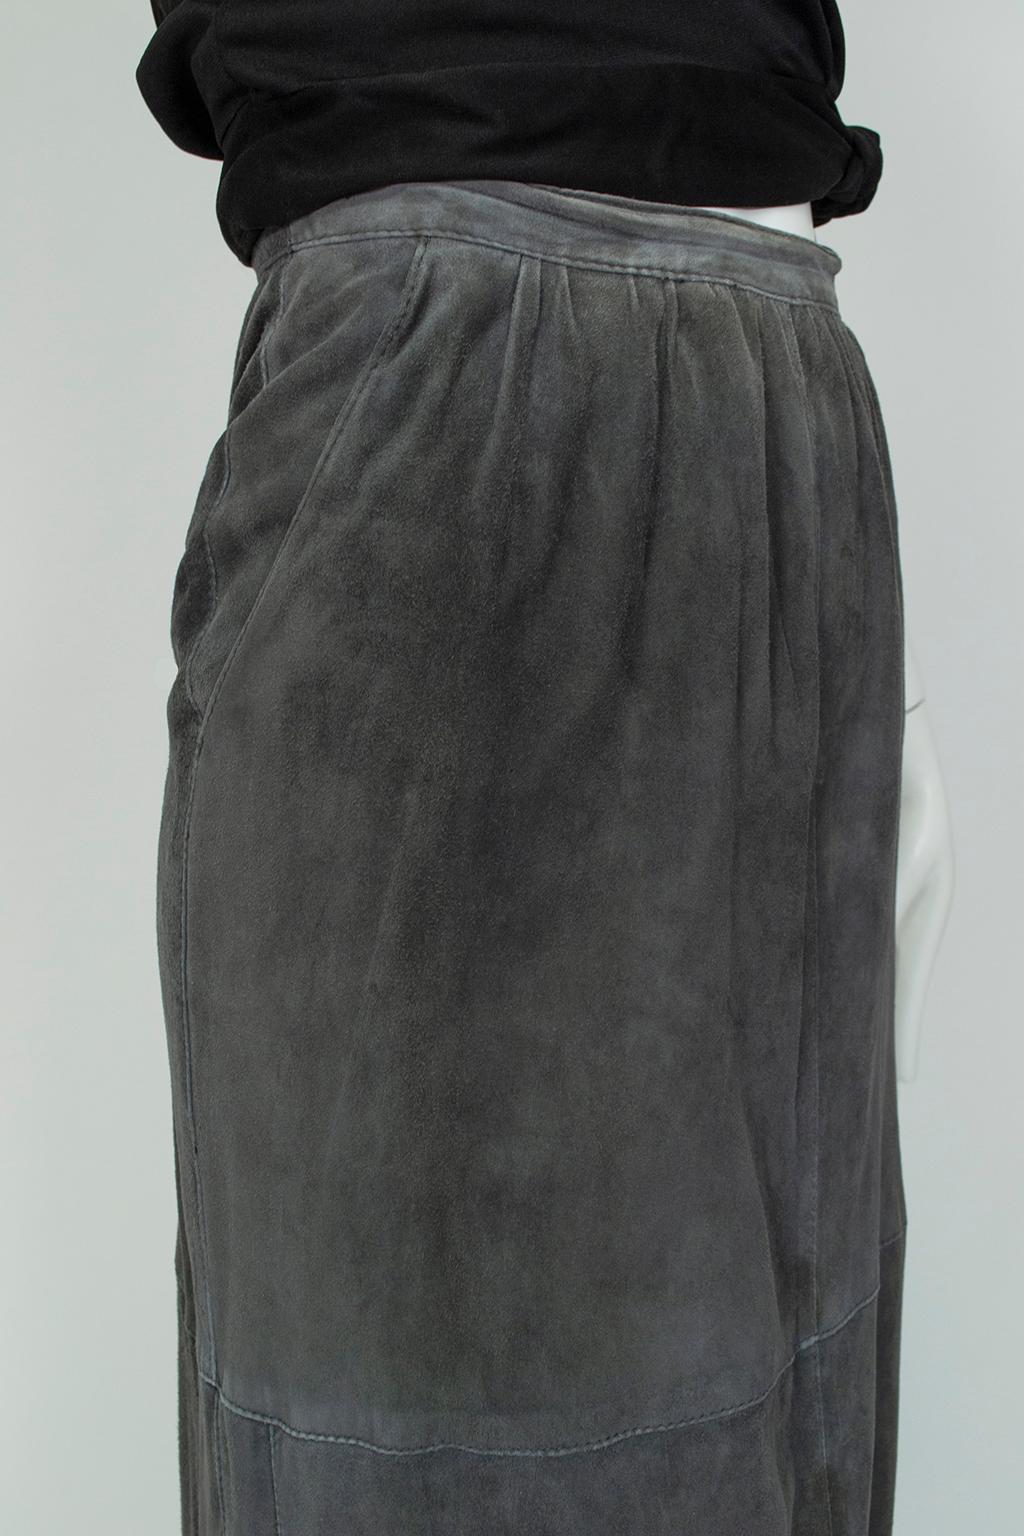 Women's Minimalist Gianfranco Ferré Charcoal Gray Suede Midi Trumpet Skirt - S, 1980s For Sale